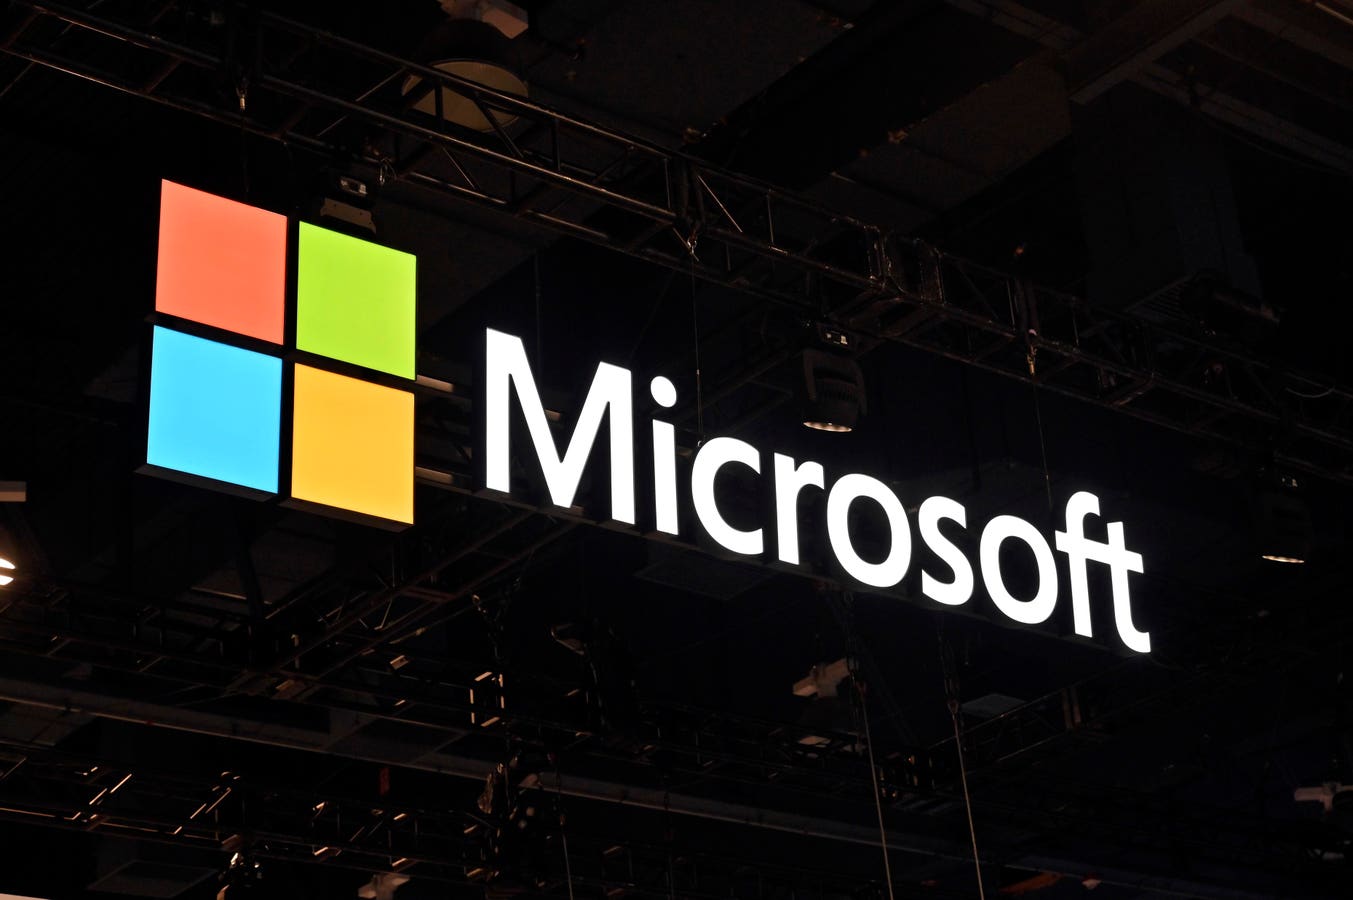 Microsoft partners launch responsible AI initiative in Europe